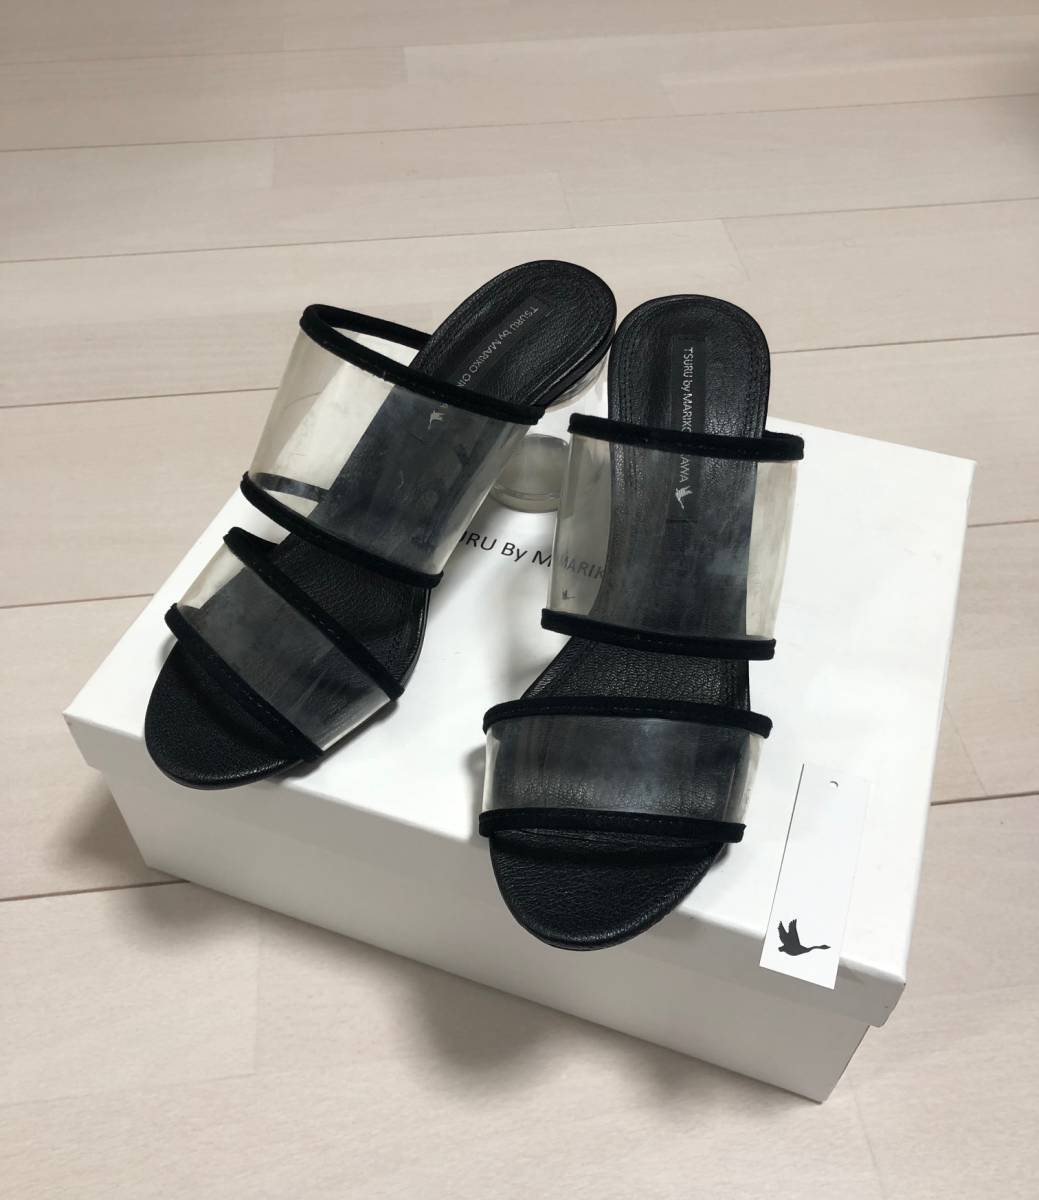  regular price 26400 jpy new goods TSURU by MARIKO OIKAWA Fizz clear sole sandals WW-1212290tsurubaima Rico o squid wa34 black 